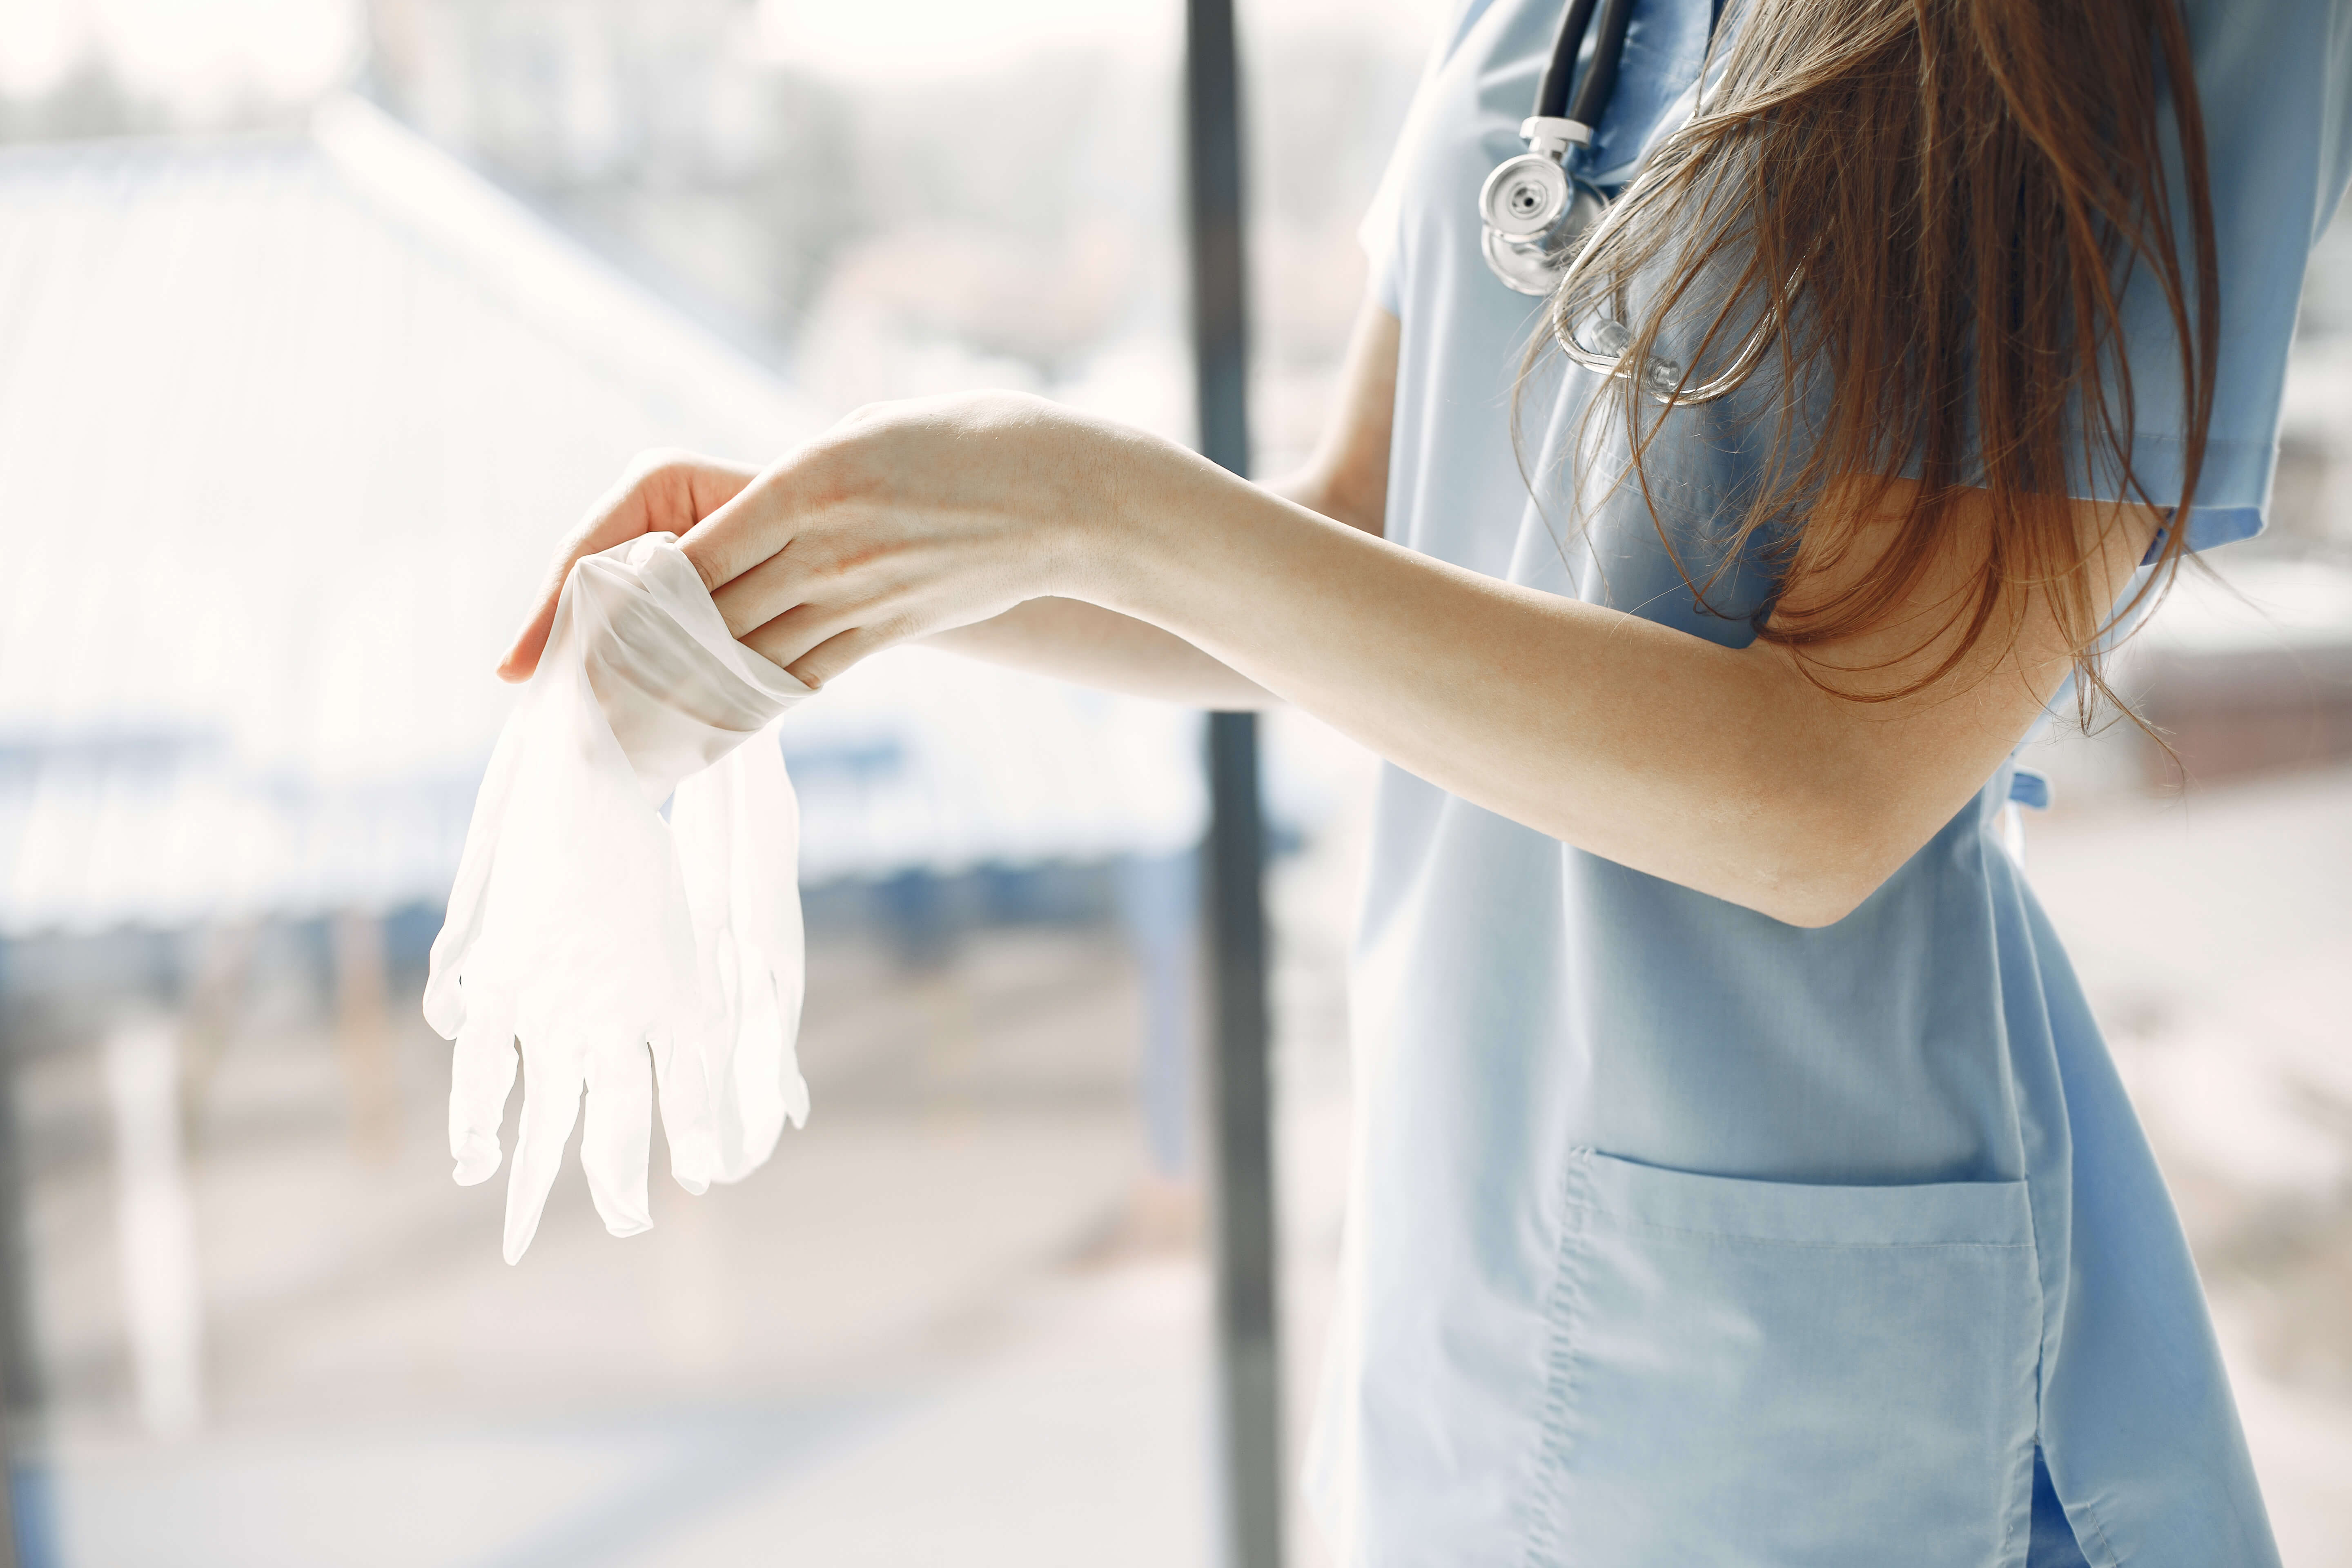 Nurse by the window wearing white gloves